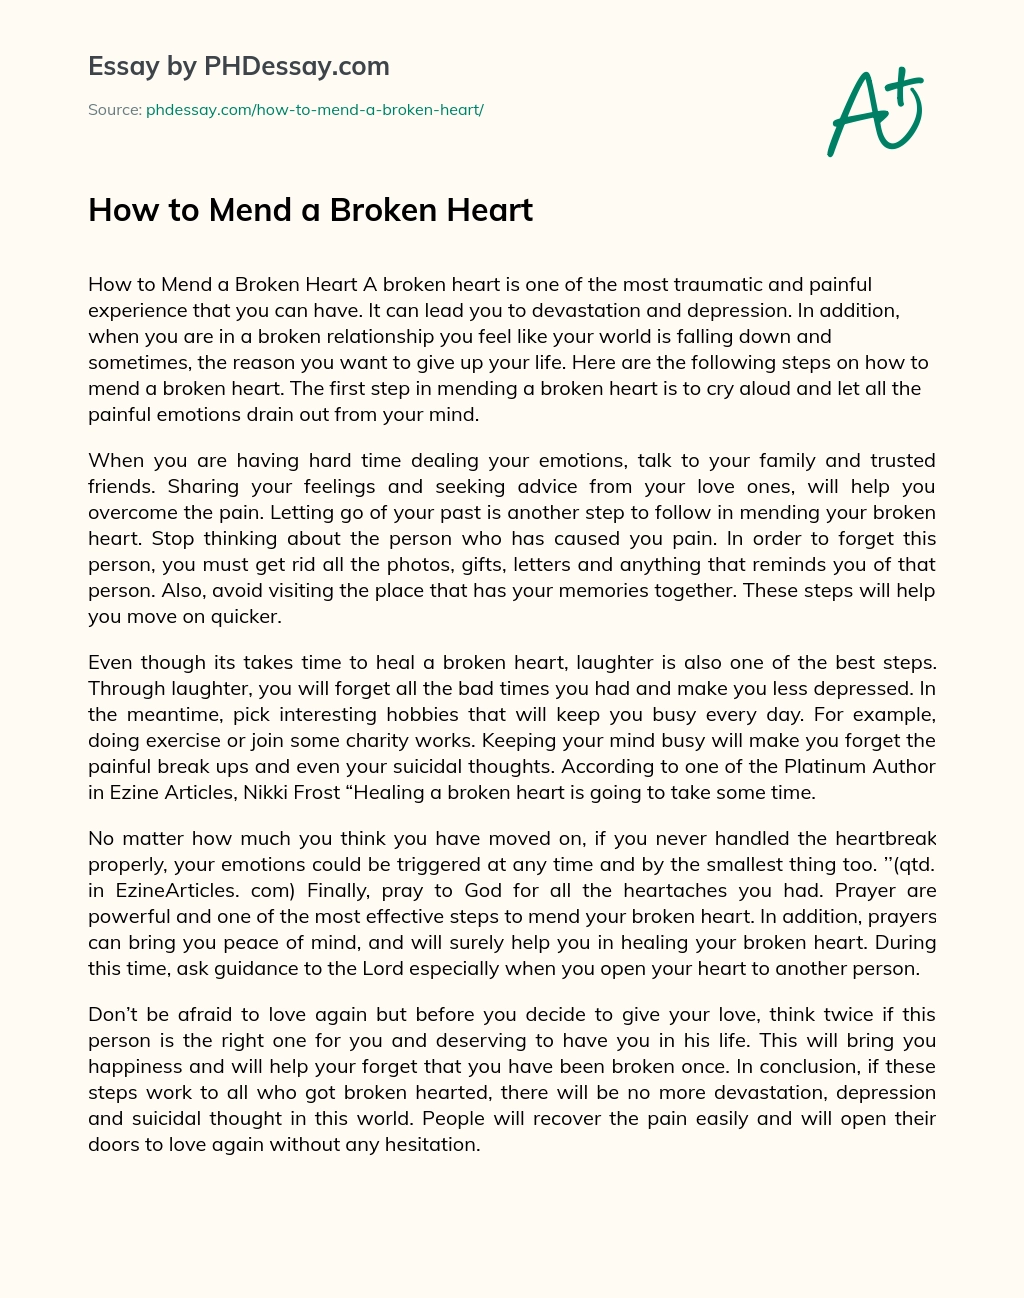 How to Mend a Broken Heart essay